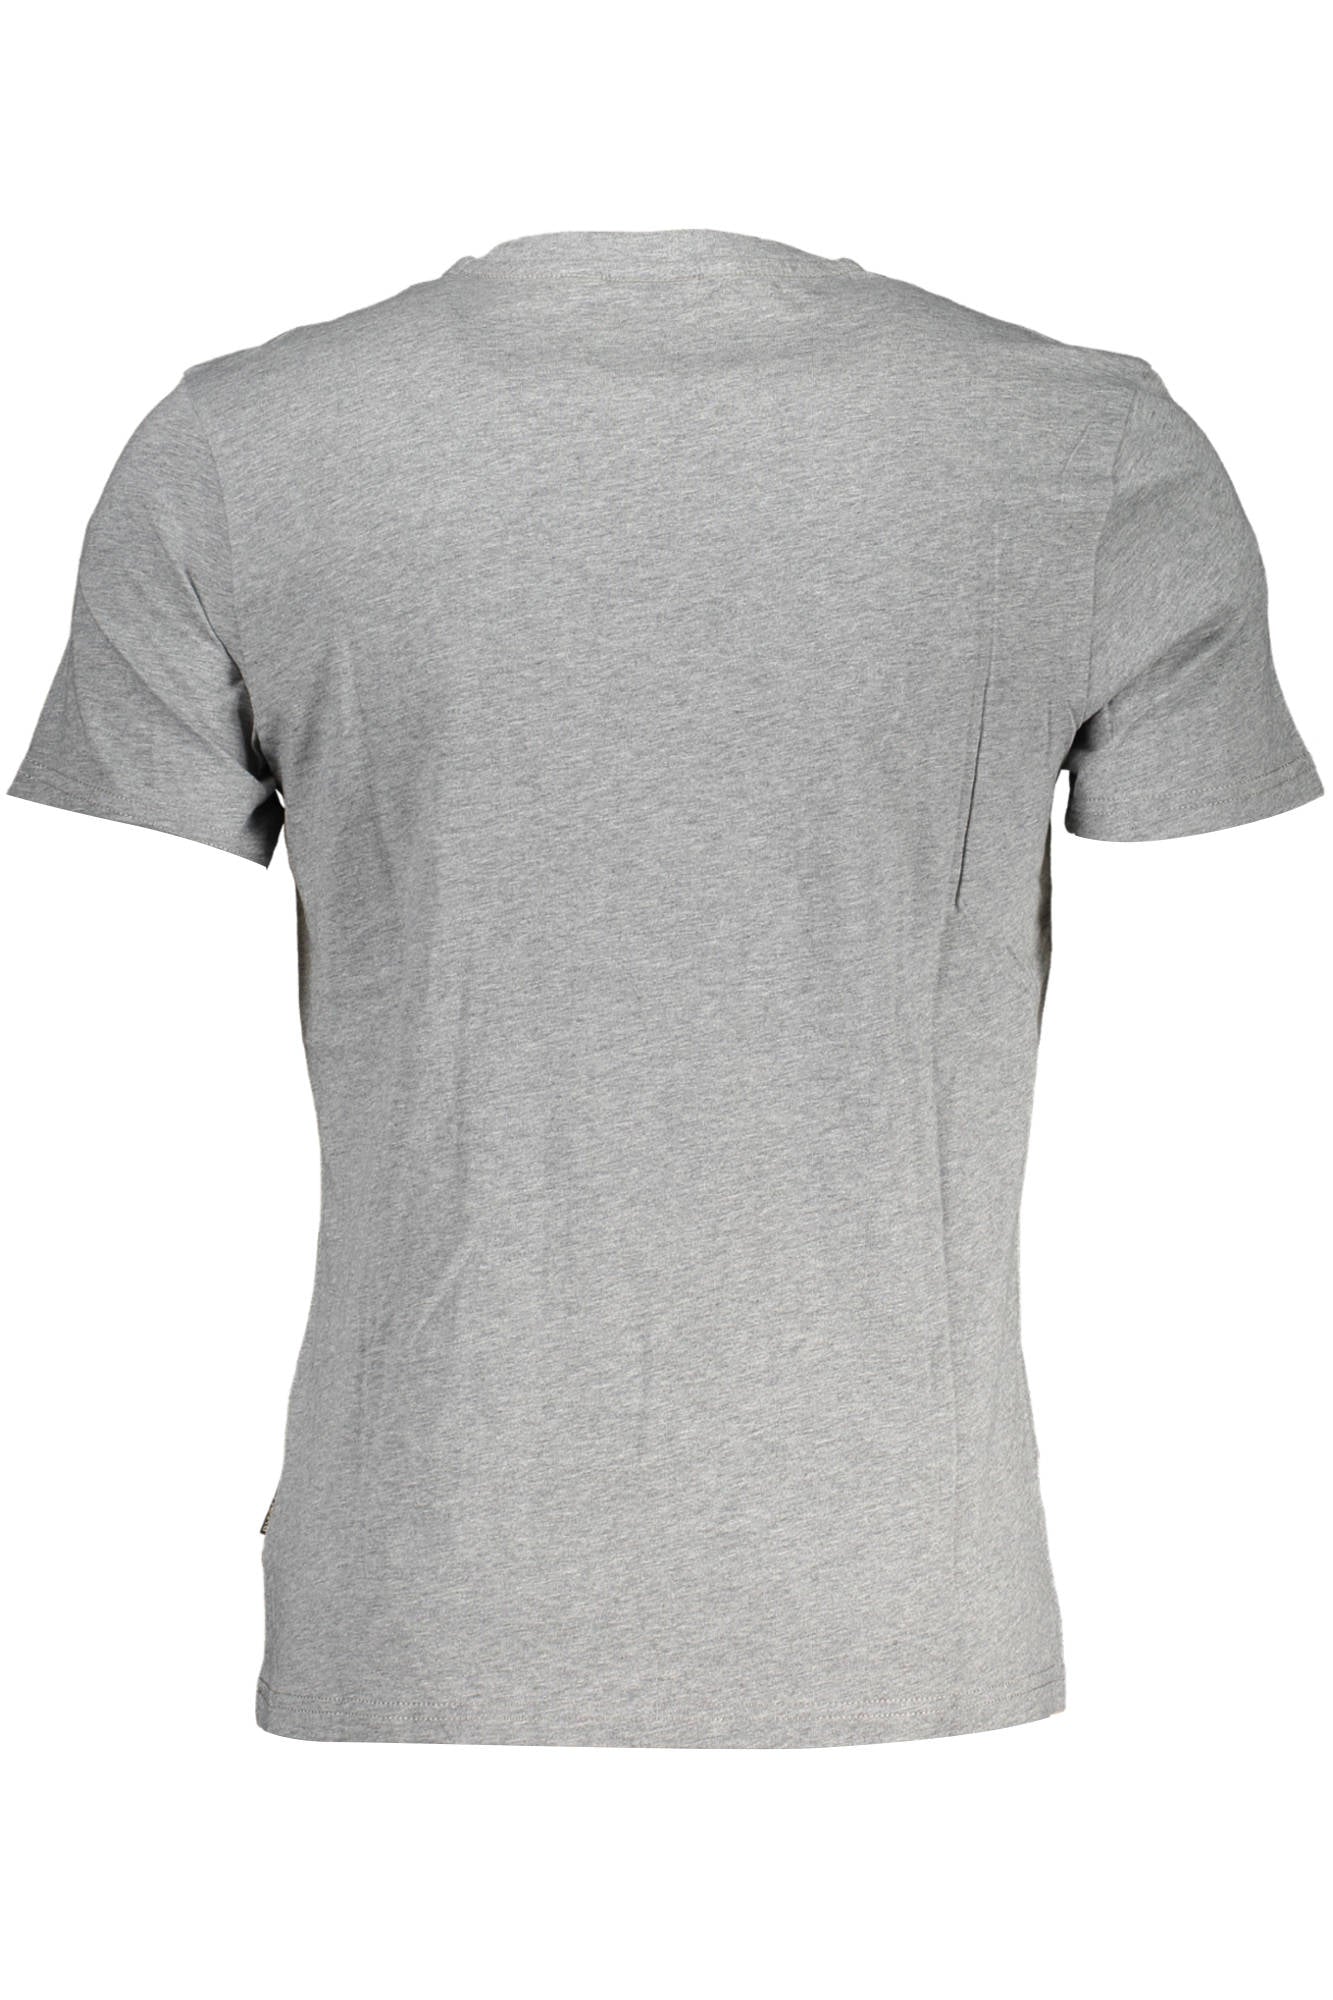 Napapijri Gray Cotton T-Shirt - Fizigo